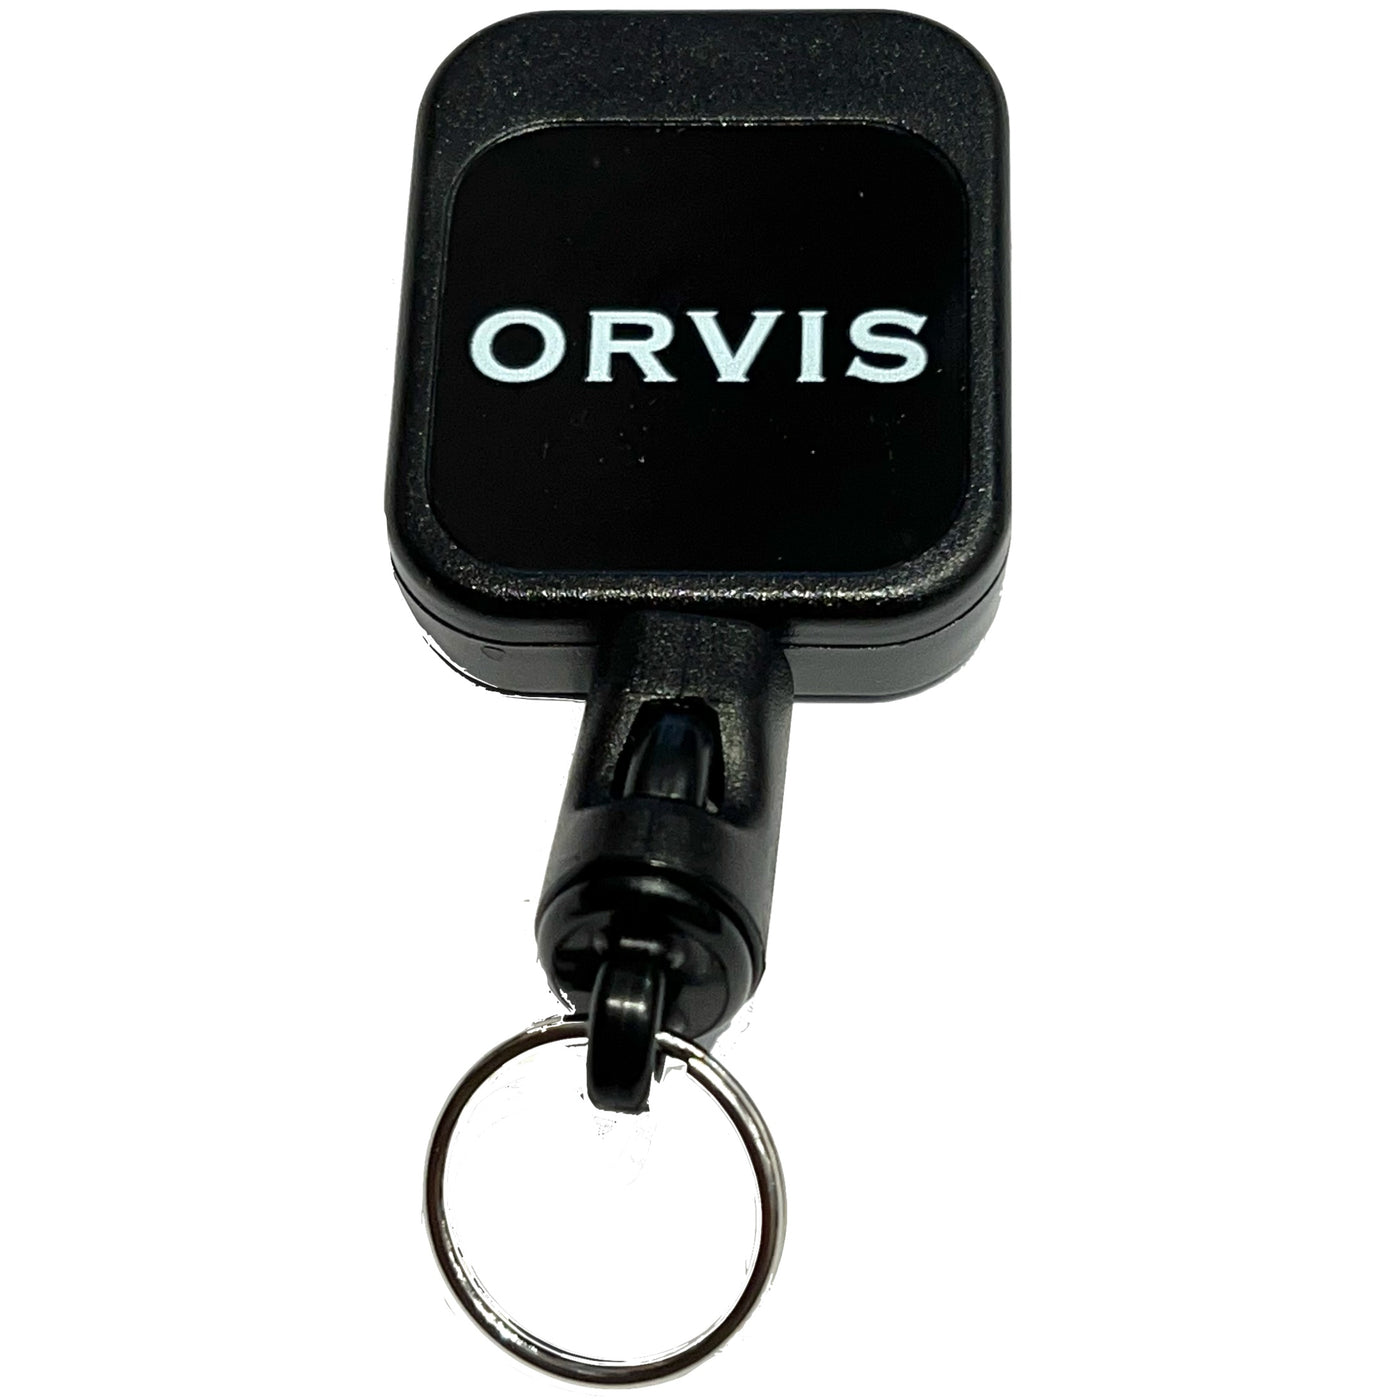 Buy Orvis Black Nickel Fly Fishing Zinger Retractable Tool Holder online at